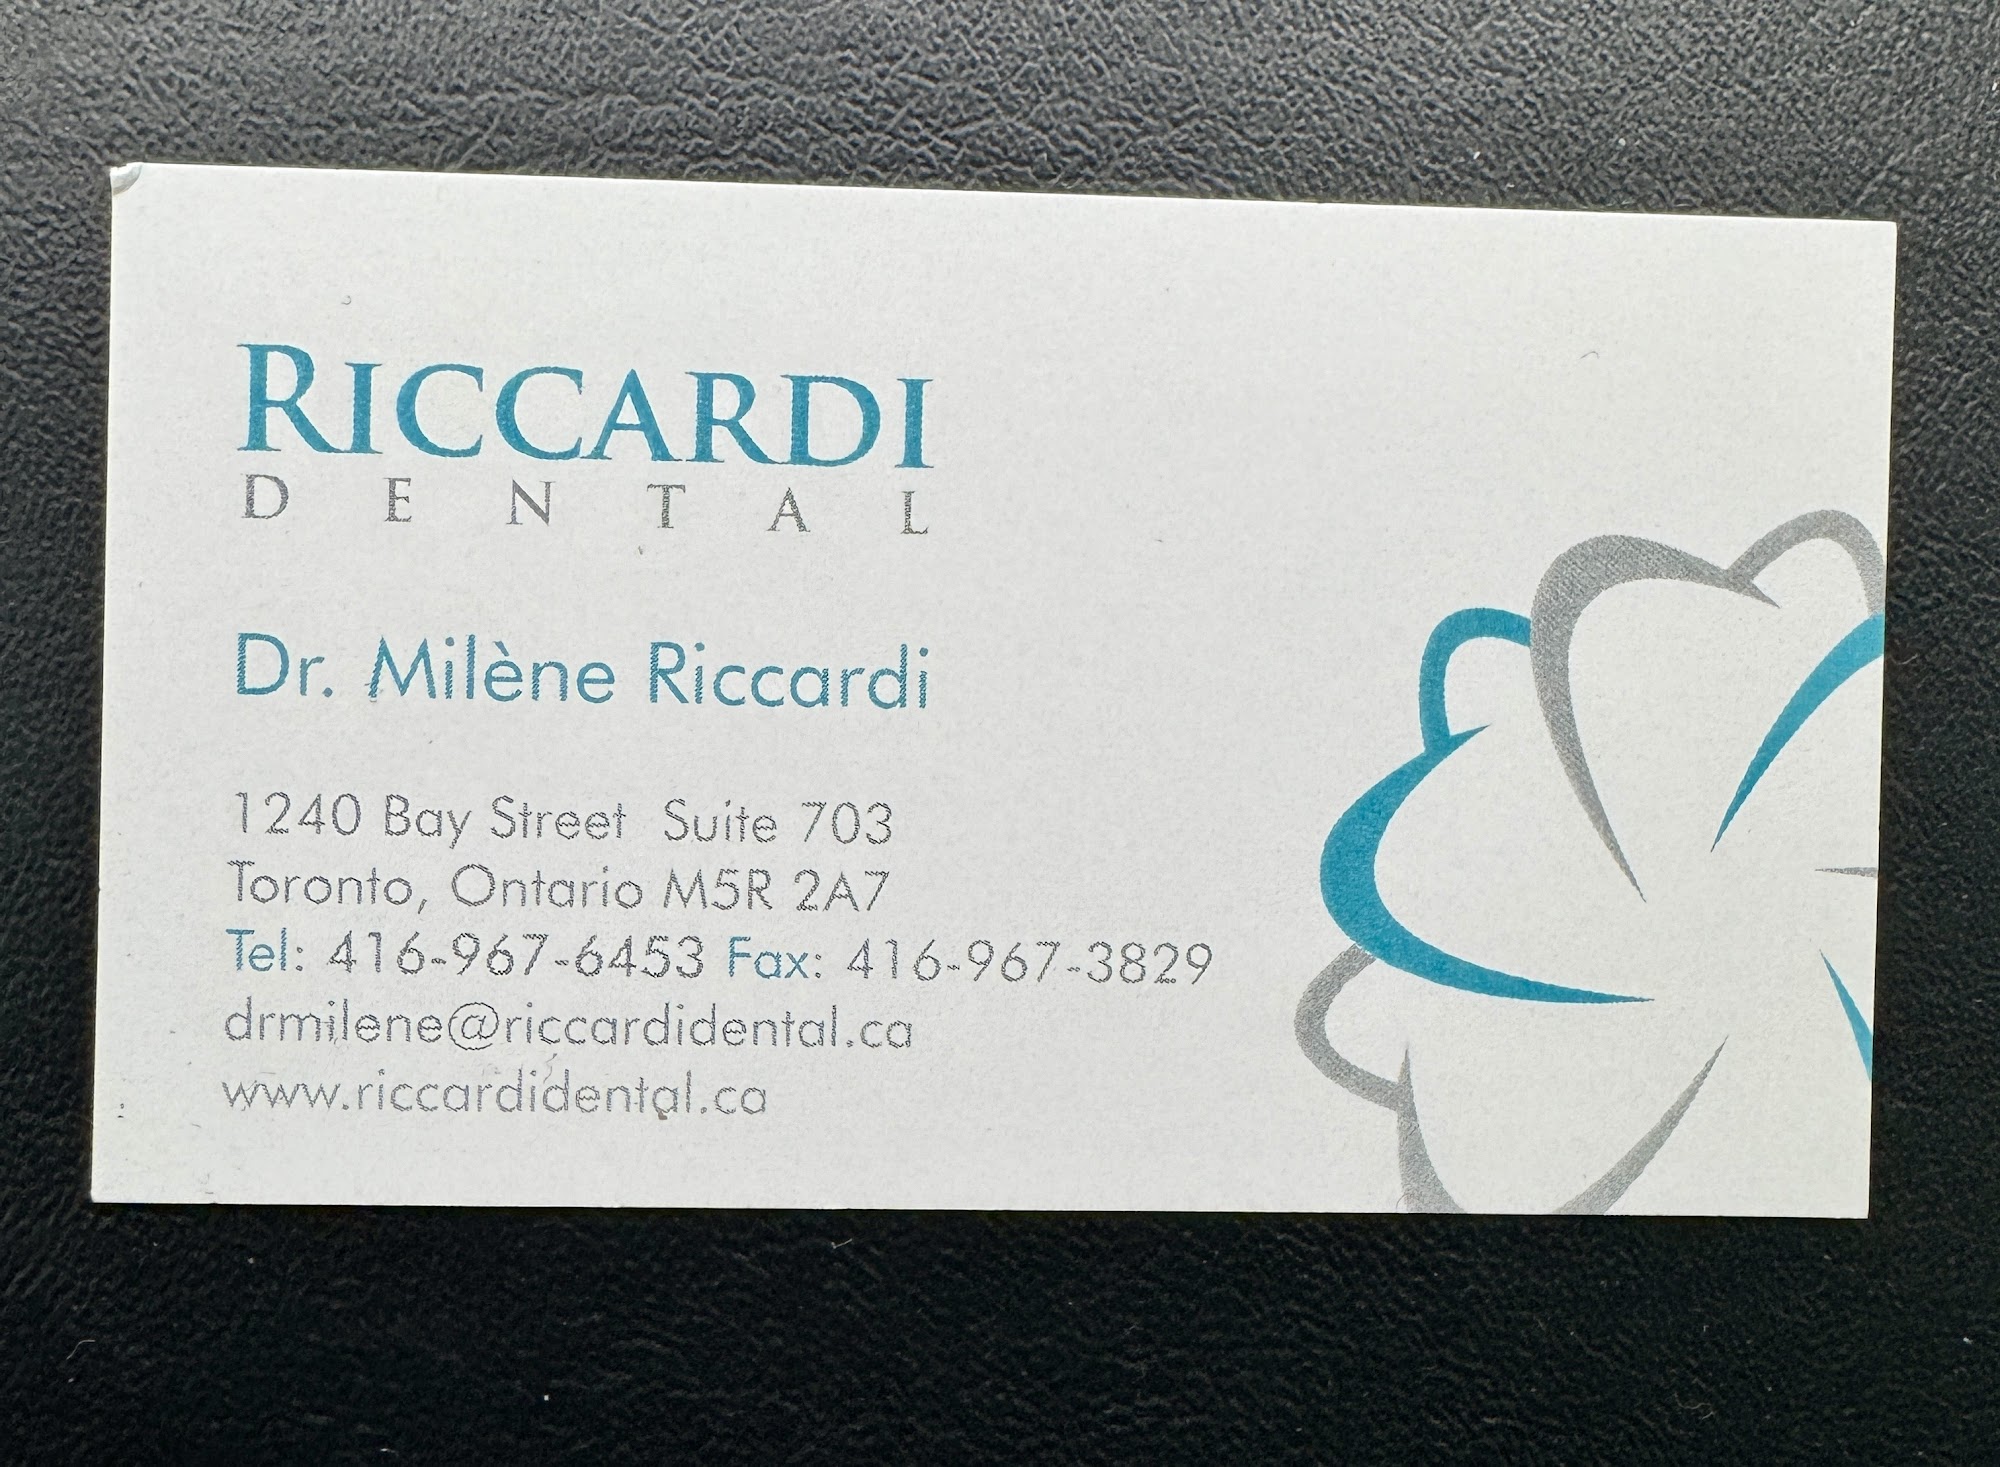 Dr. Milene Riccardi